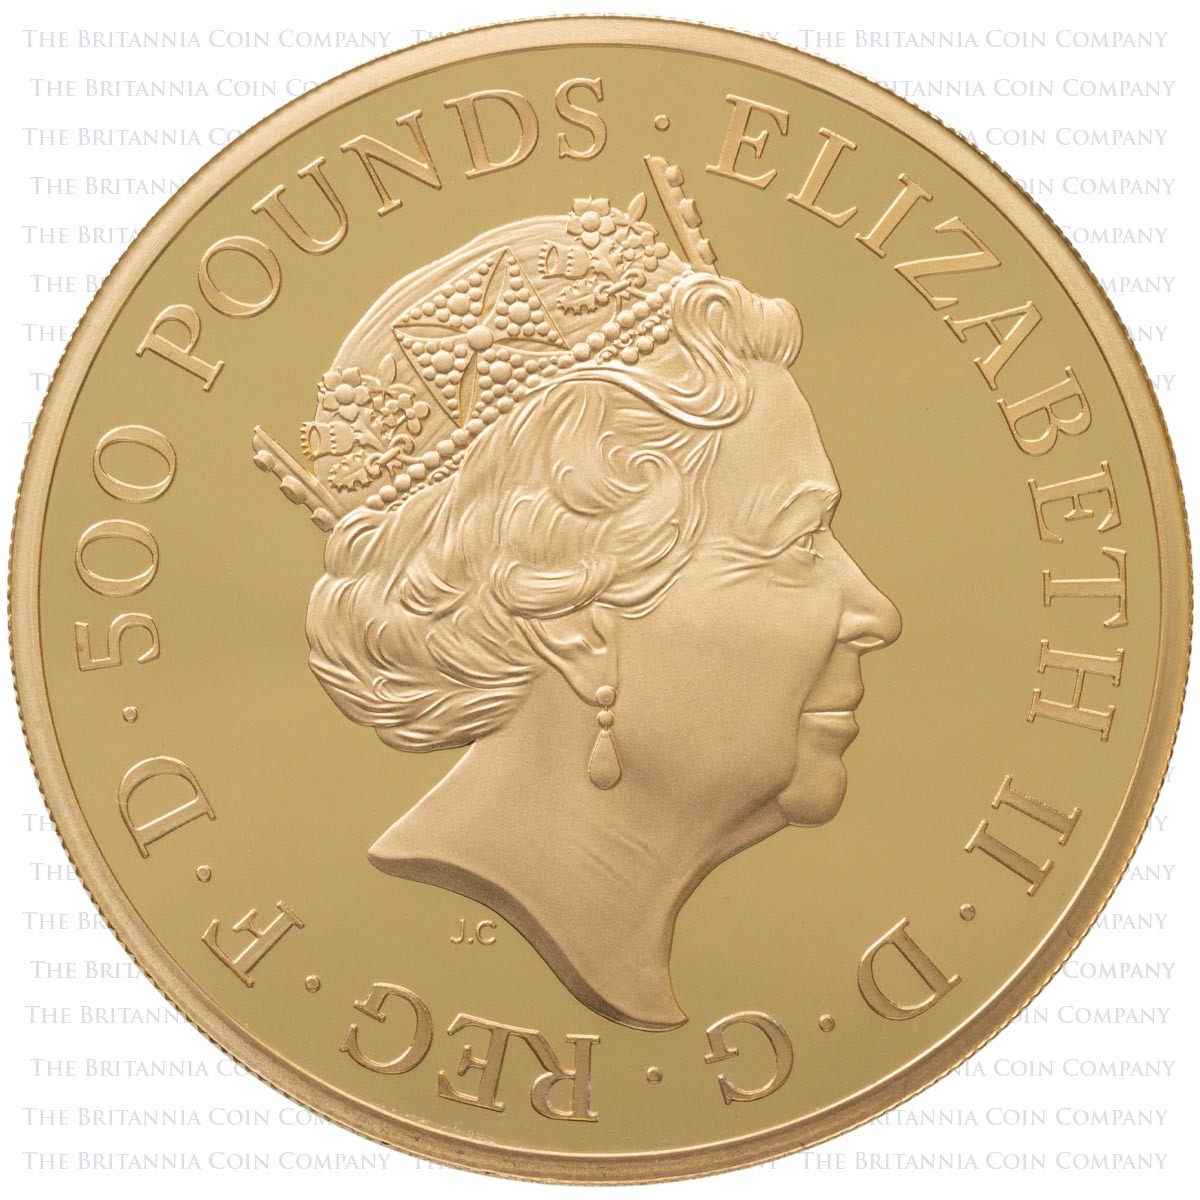 BR155OZG 2015 Definitive Britannia Five Ounce Gold Proof Coin Obverse